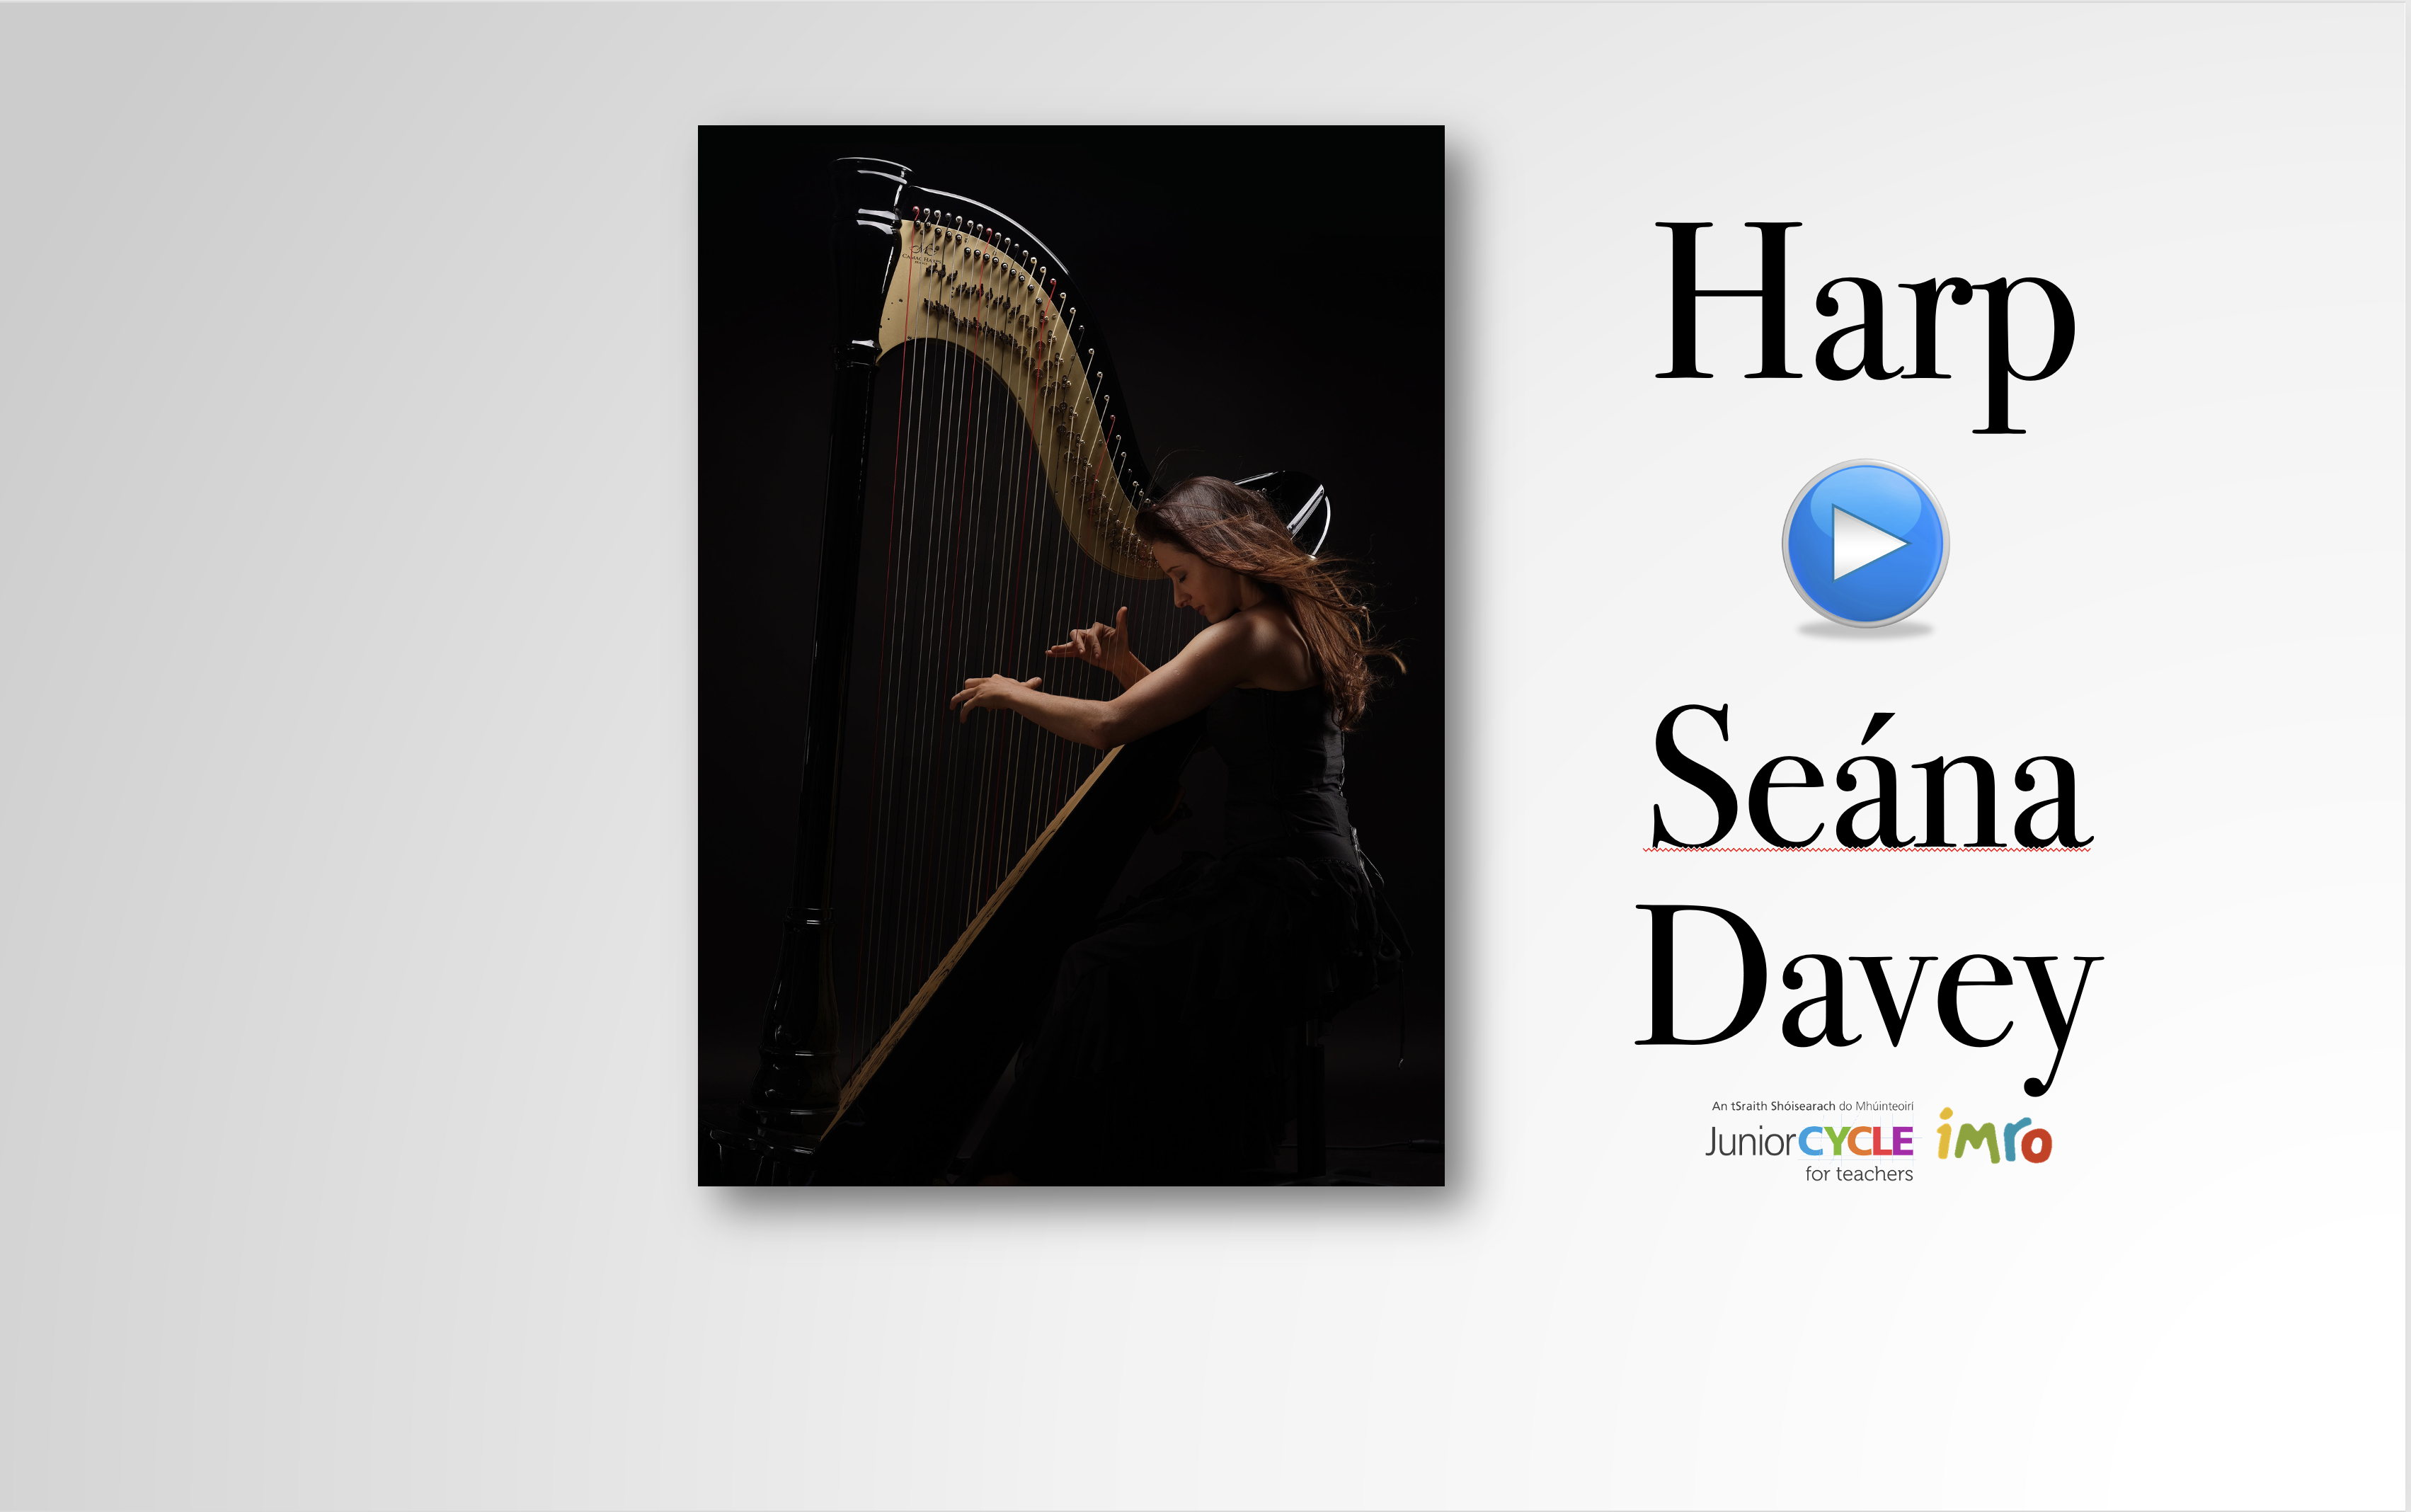 Meet the Harp